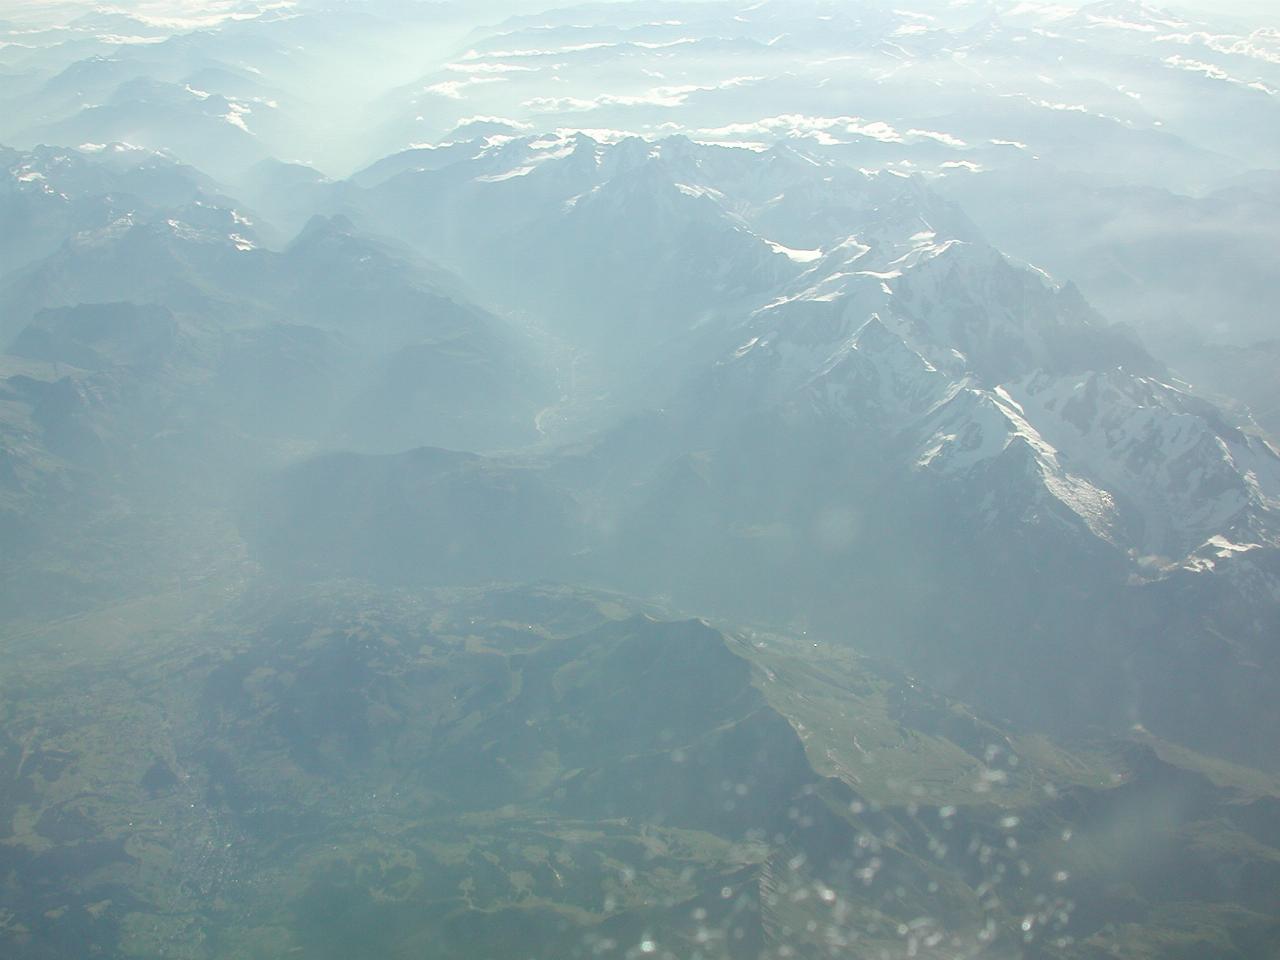 Perhaps Mt. Blanc, the Alps